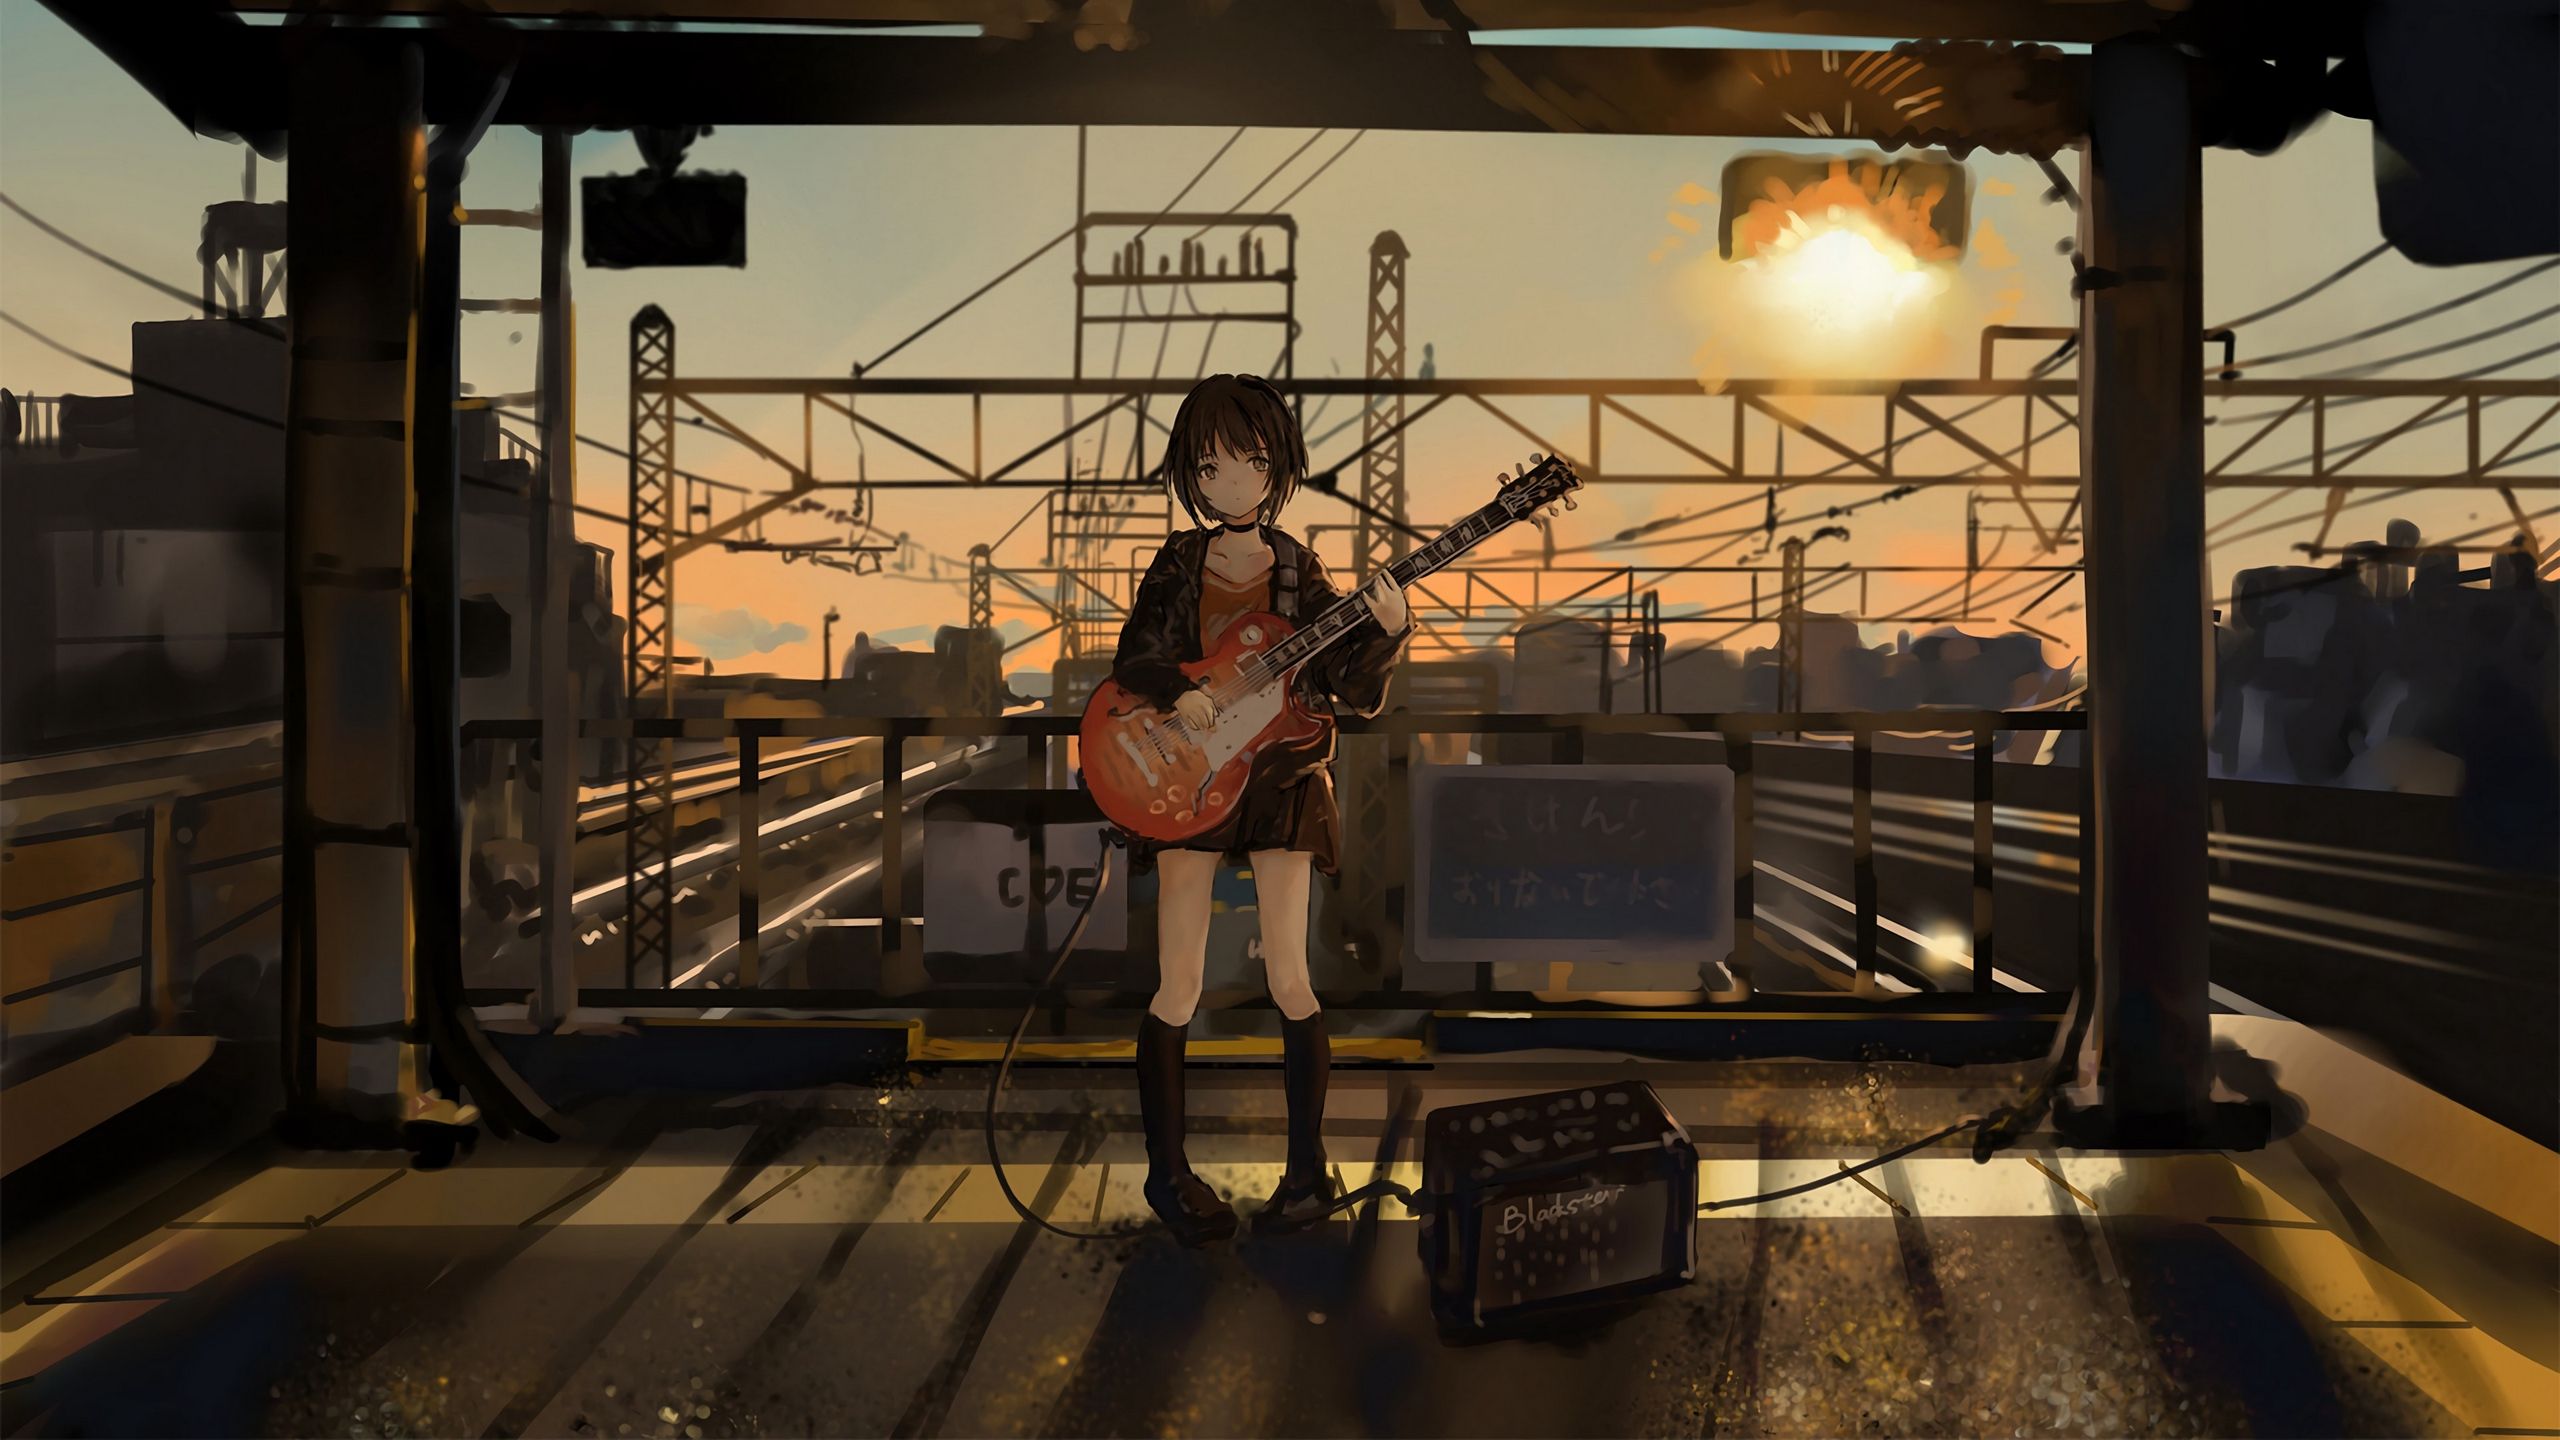 Download wallpaper 2560x1440 girl, guitar, anime, musician